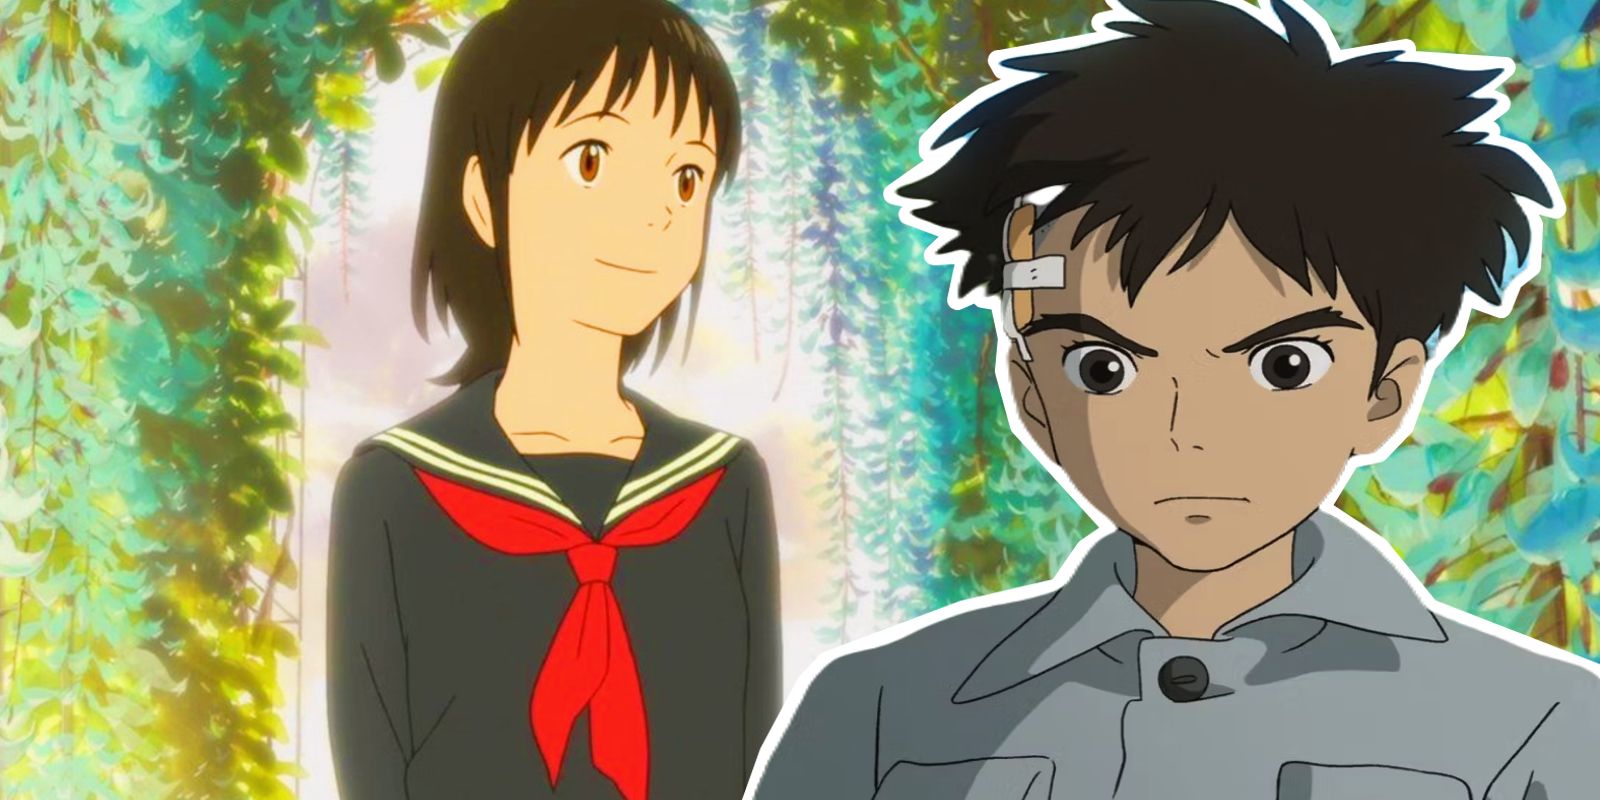 Mirai from the movie Mirai by Mamoru Hosada and Mahito from Studio Ghibli's The Boy and the Heron